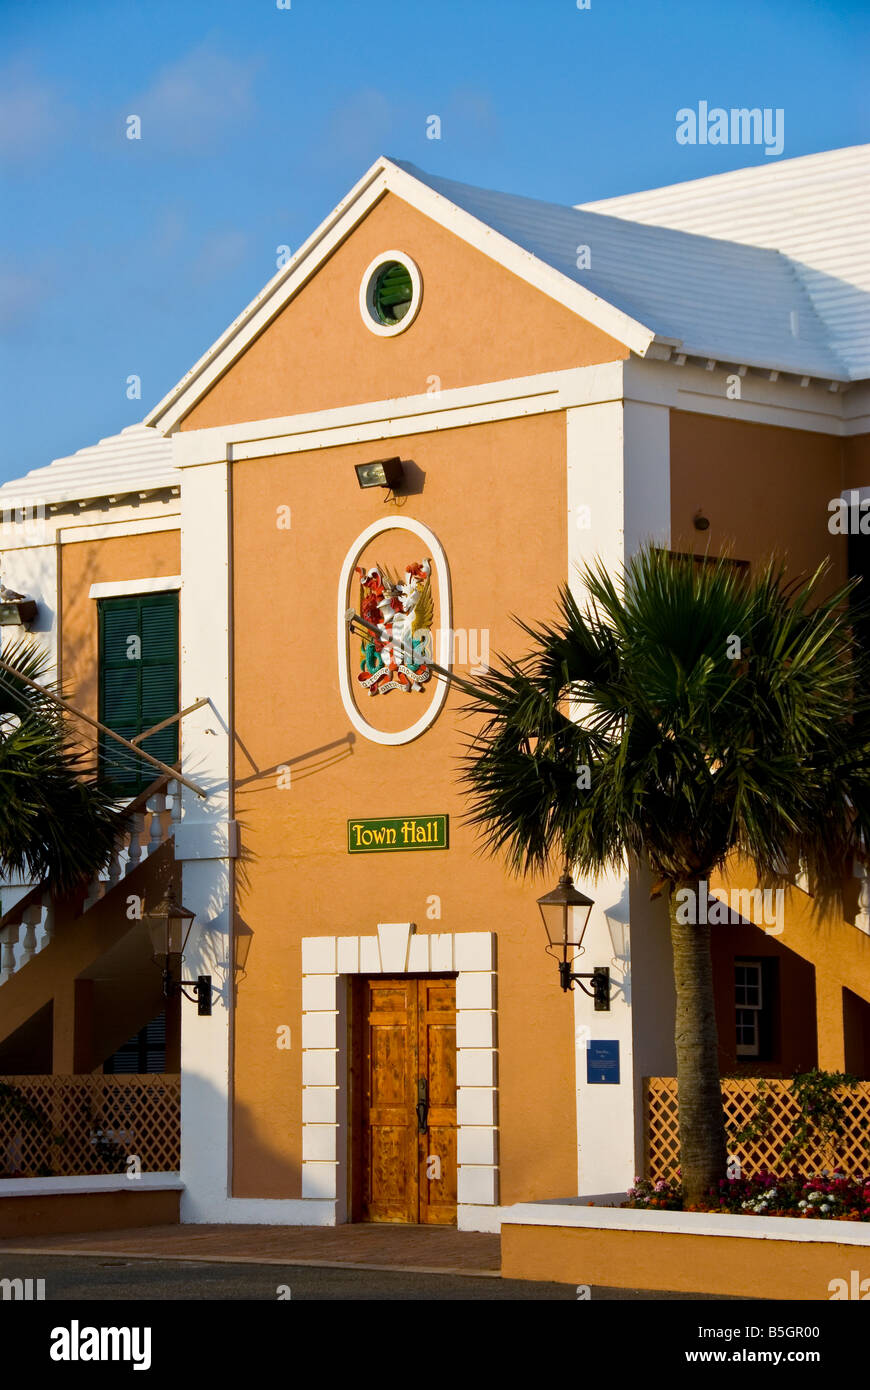 St George Town Hall 1782 Bermudes Kings Square attraction touristique Banque D'Images